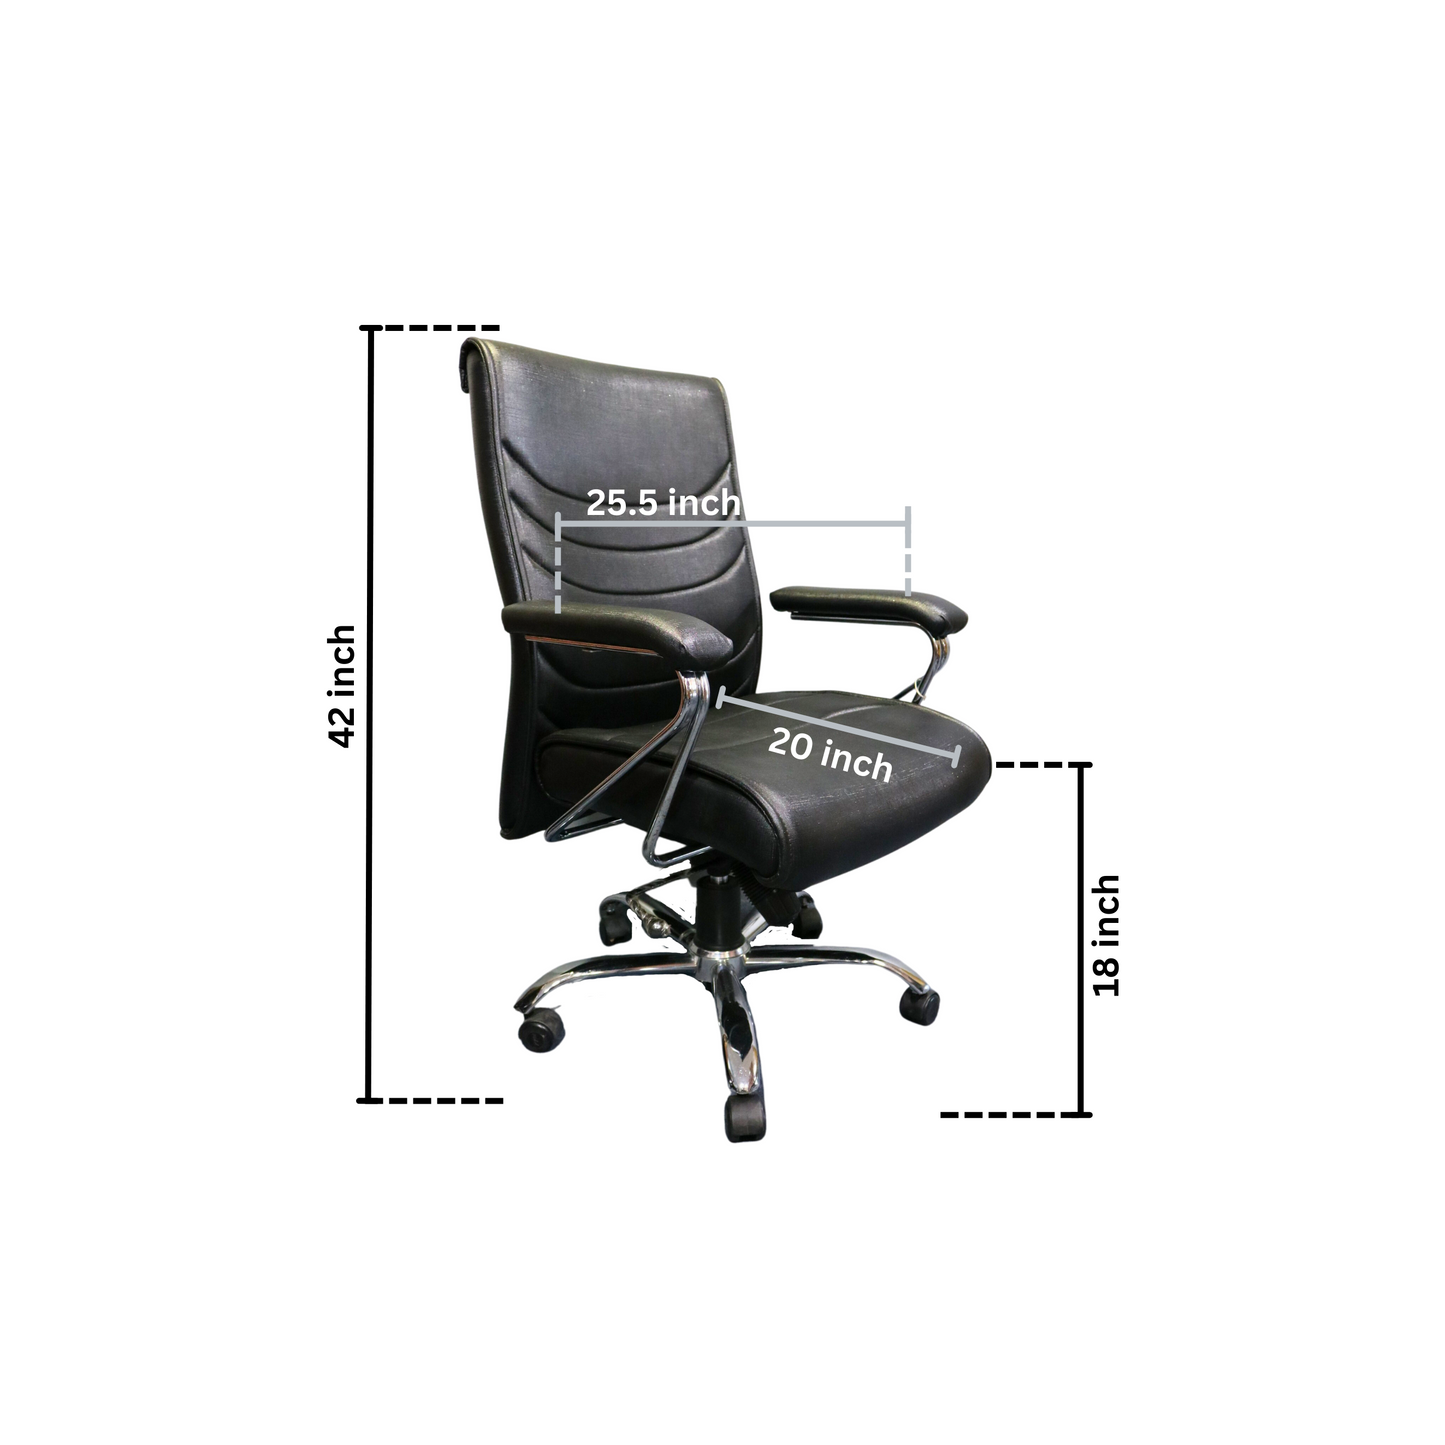 701 Executive Cushion Chair (Mid-Back)